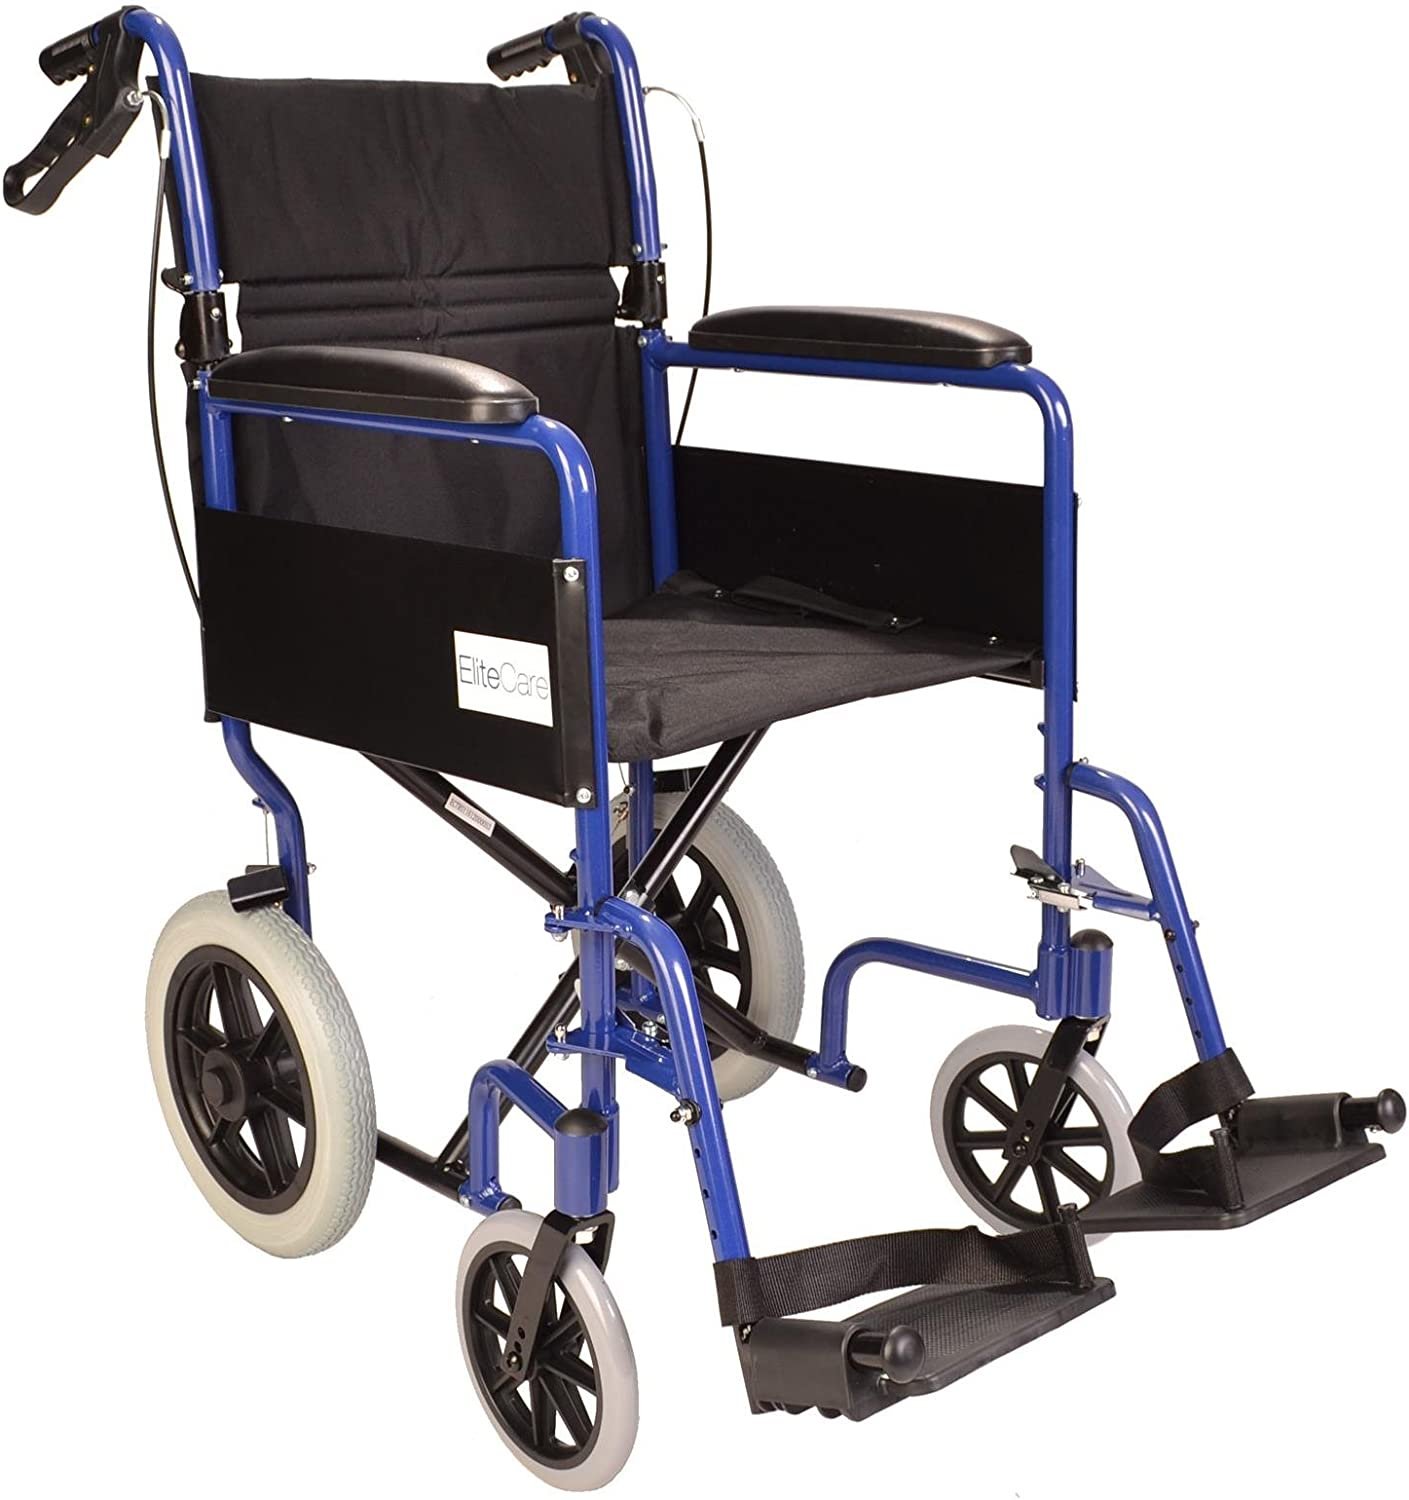 Lightweight aluminium folding transit travel wheelchair with handbrakes